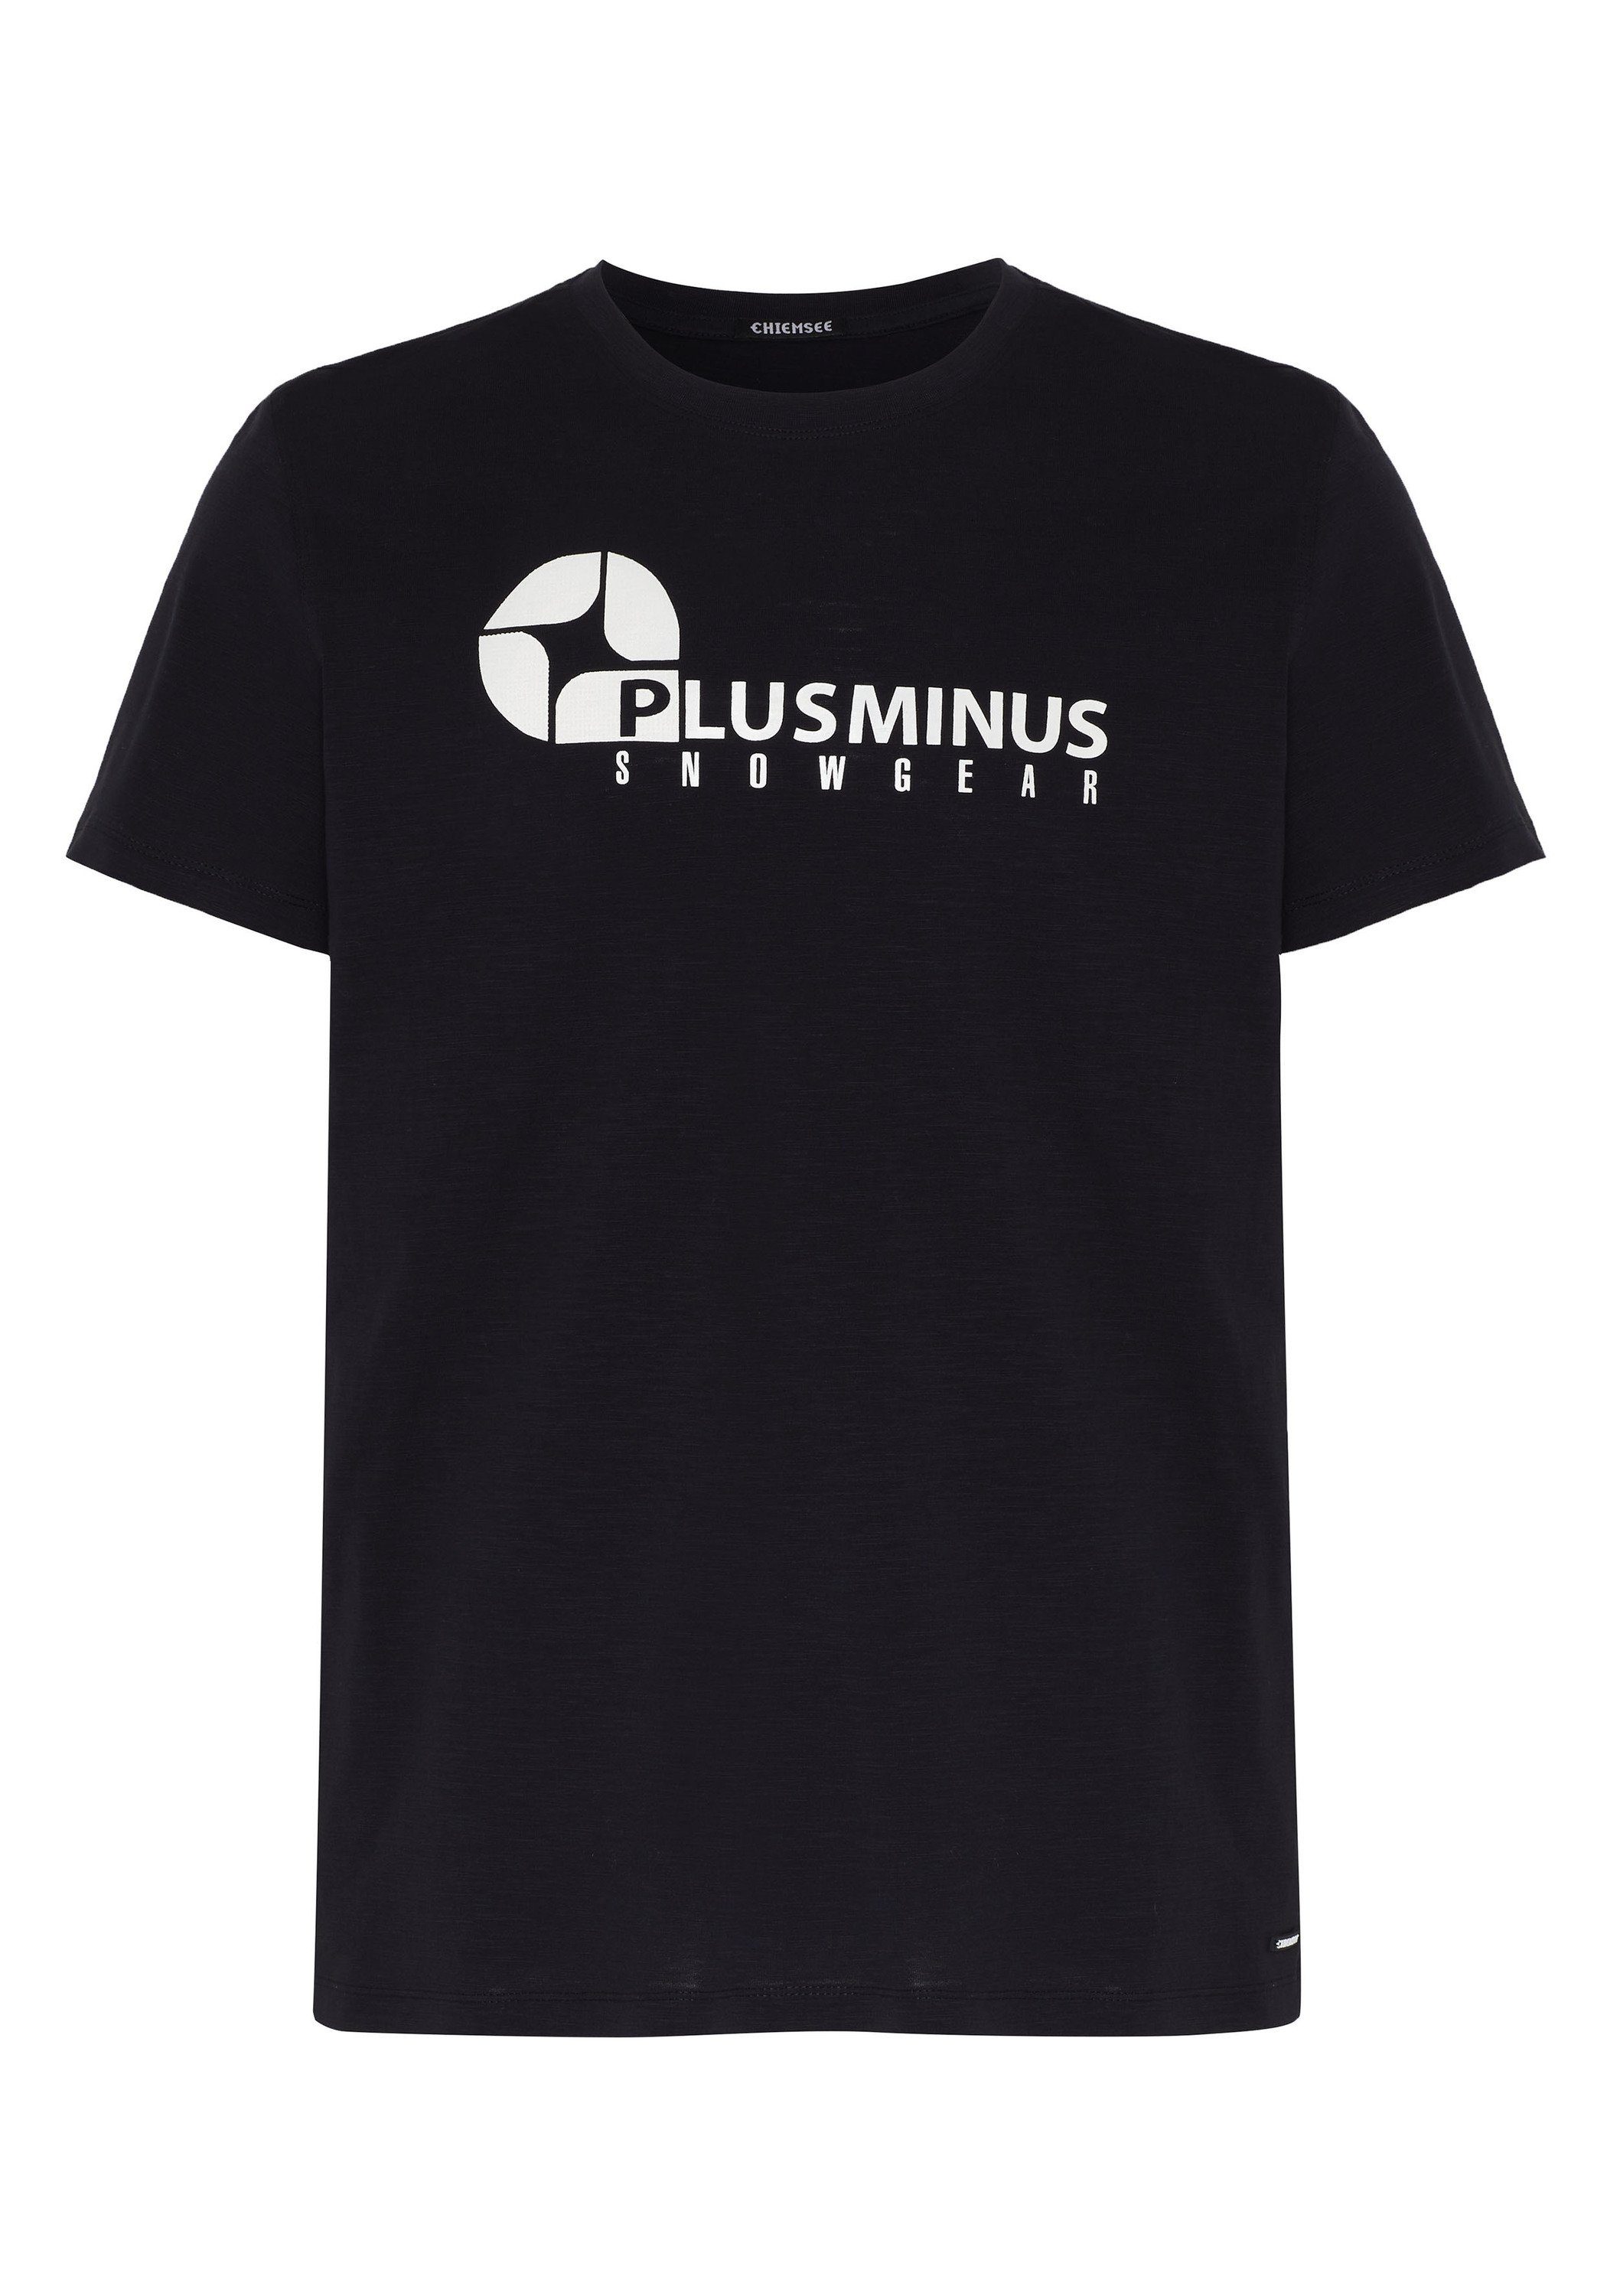 Chiemsee Print-Shirt T-Shirt im PLUS-MINUS-Design 1 Deep Black